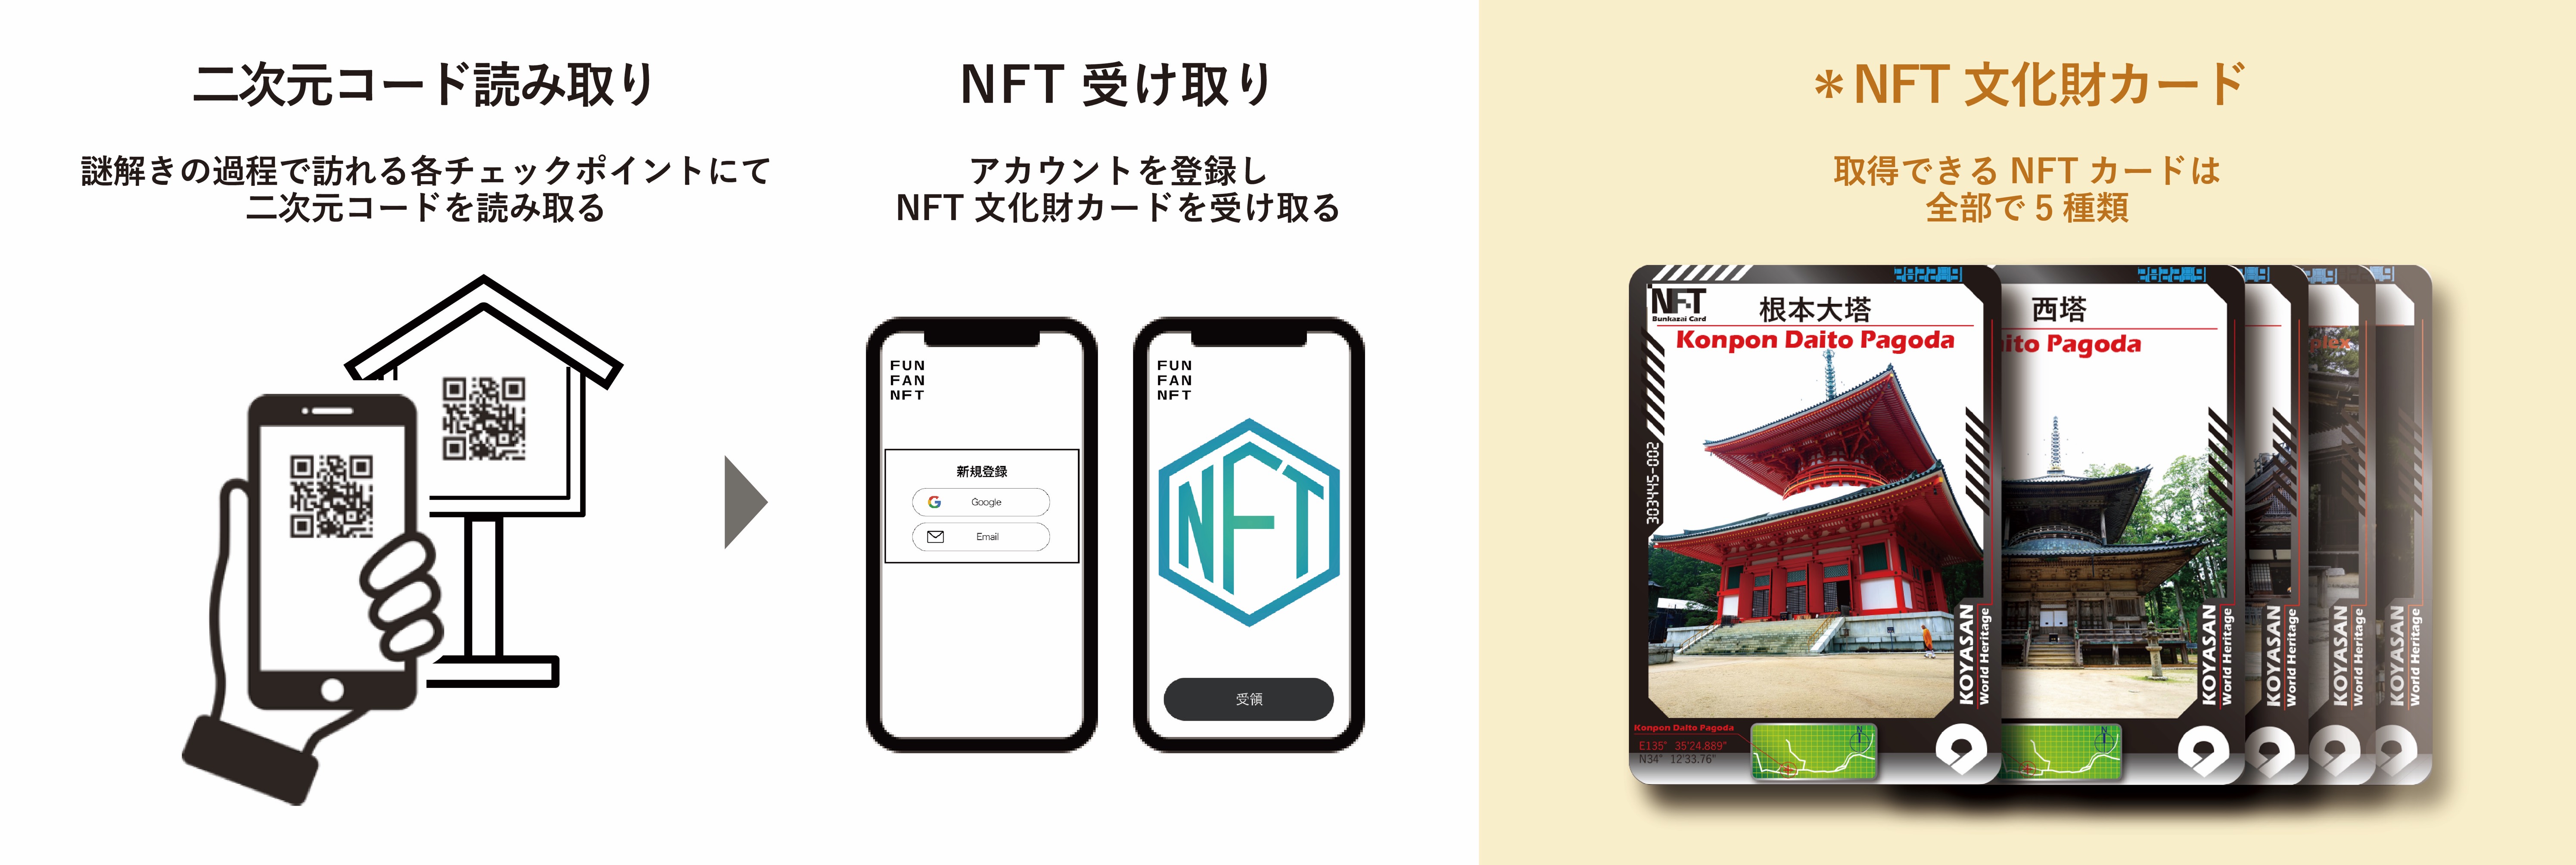 『NFT文化財カード』の受け取りフロー